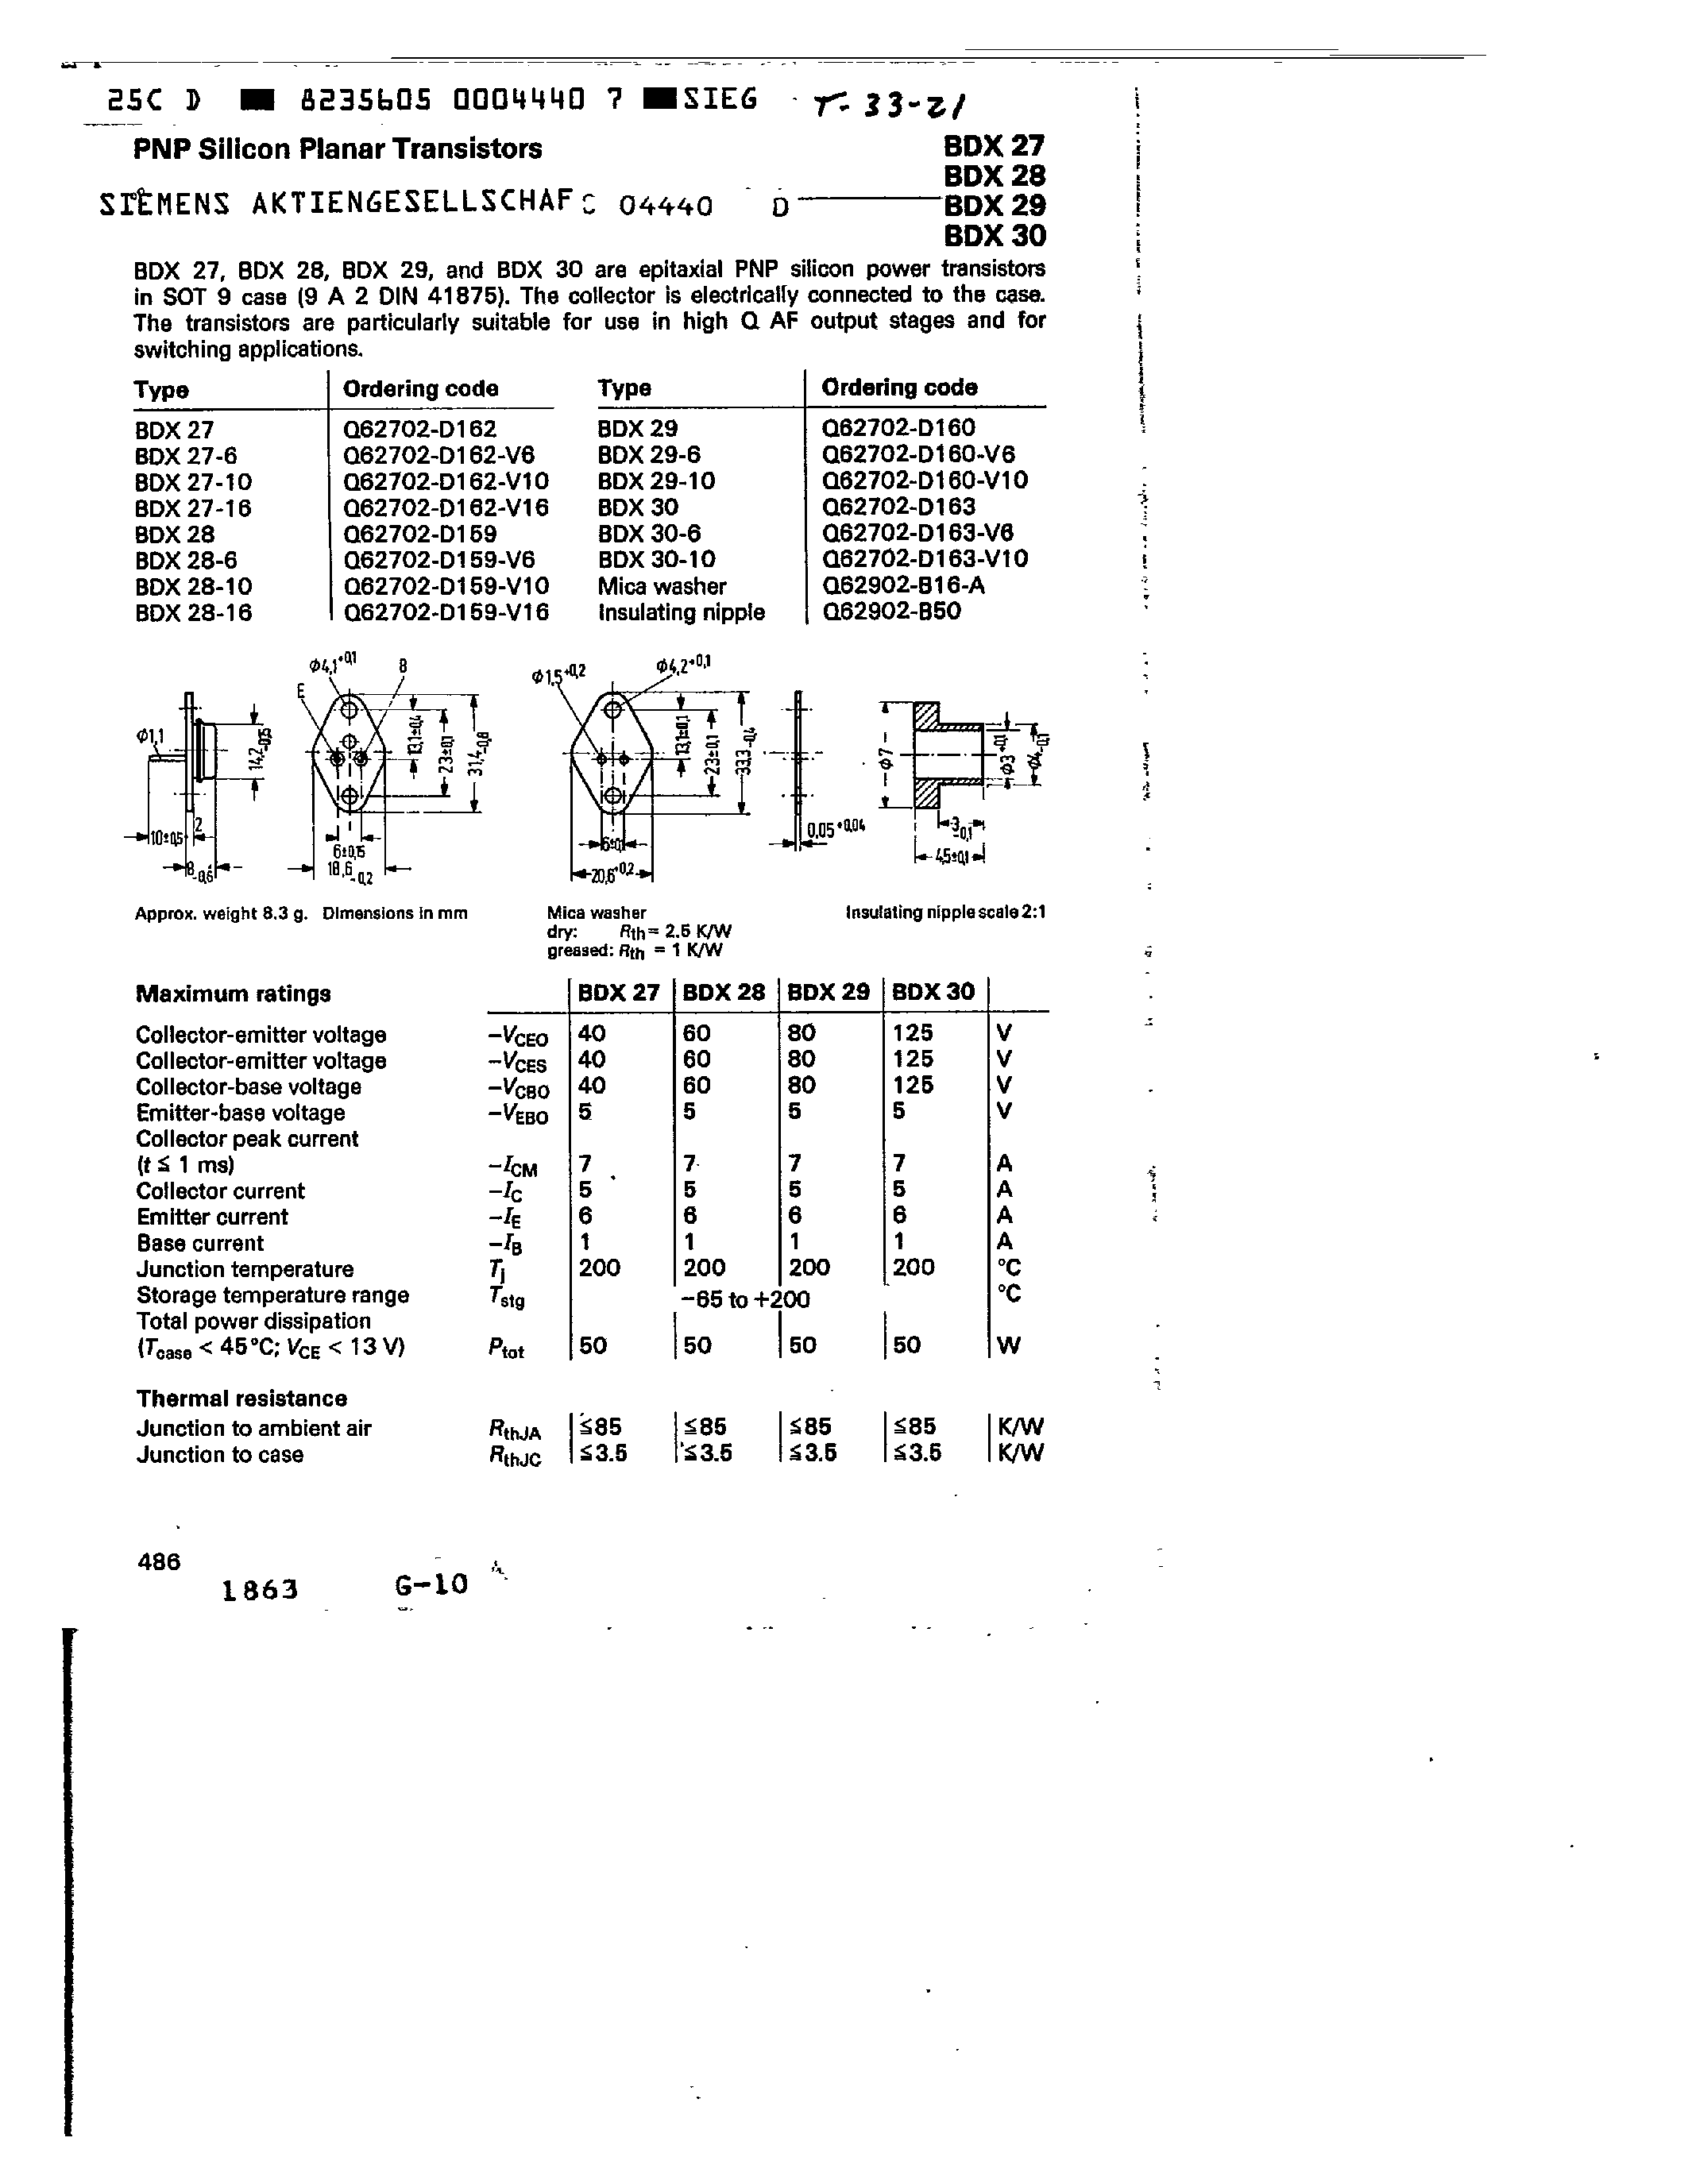 Datasheet BDX27-10 - PNP SILICON PLANAR TRANSISTORS page 1